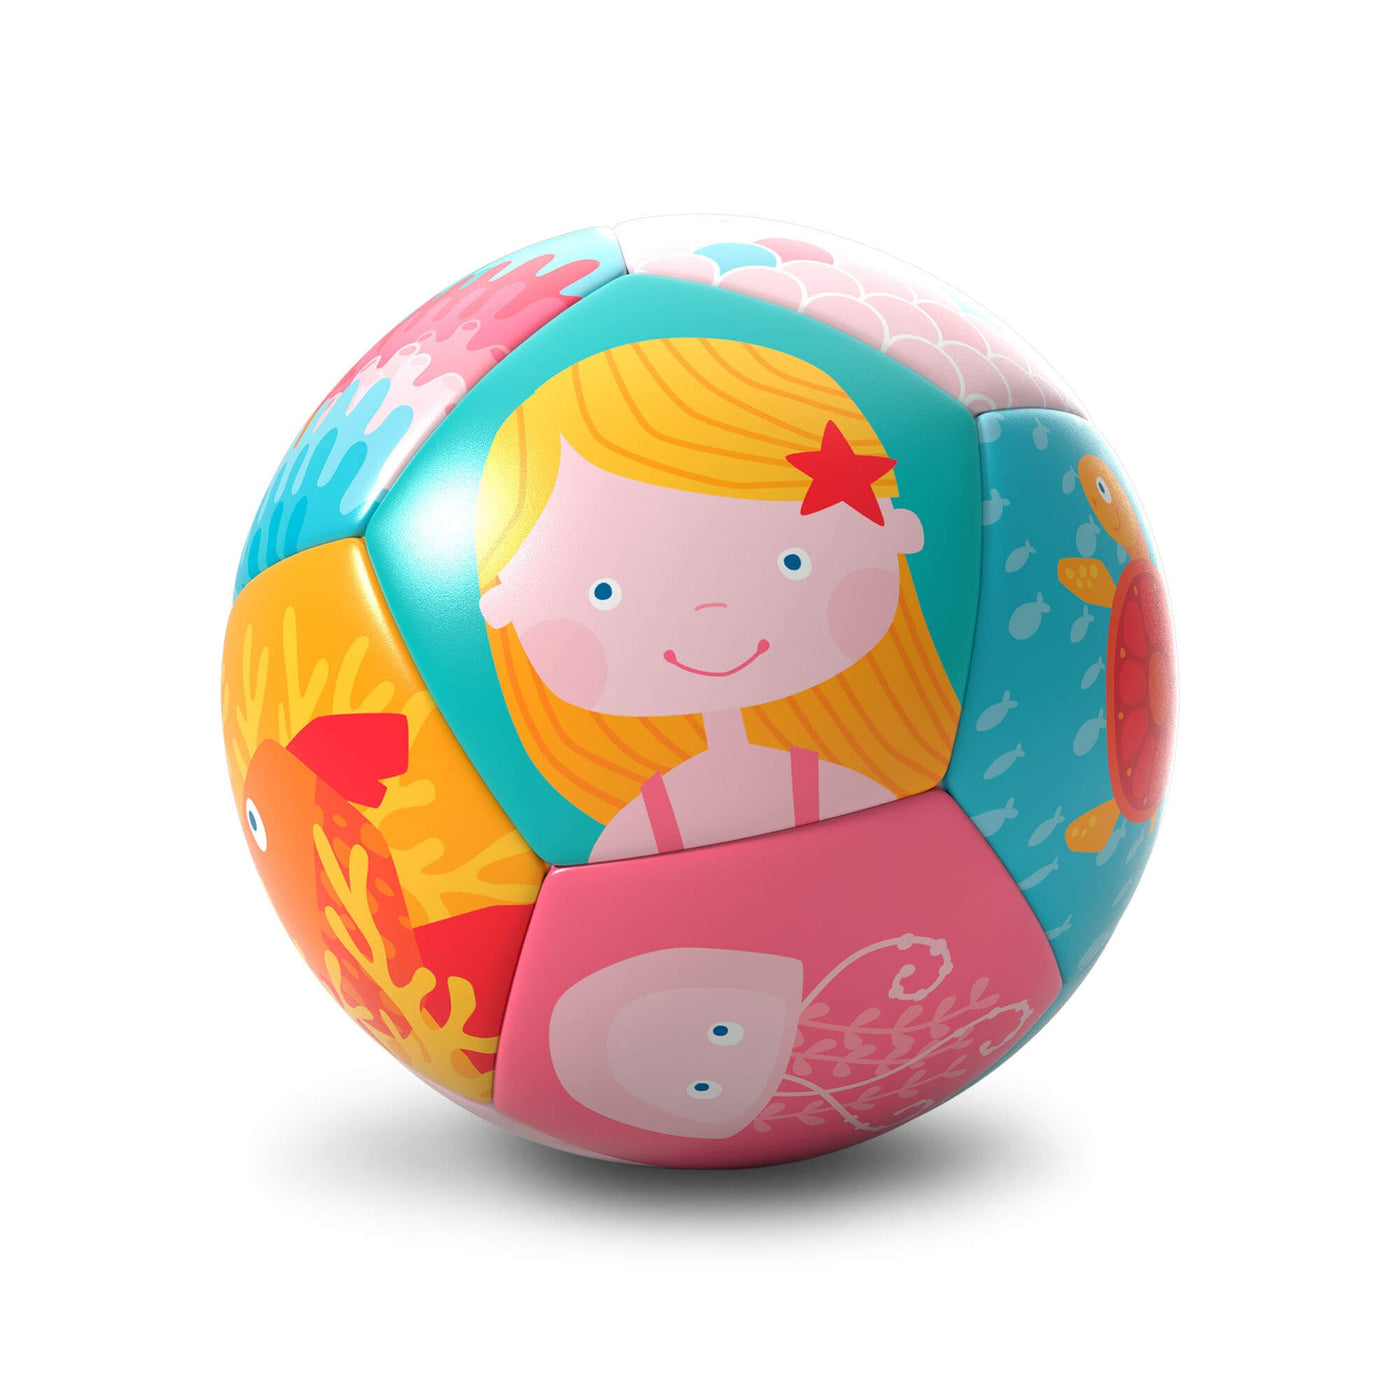 Mermaid Soft Baby Ball 4.5" - HABA USA